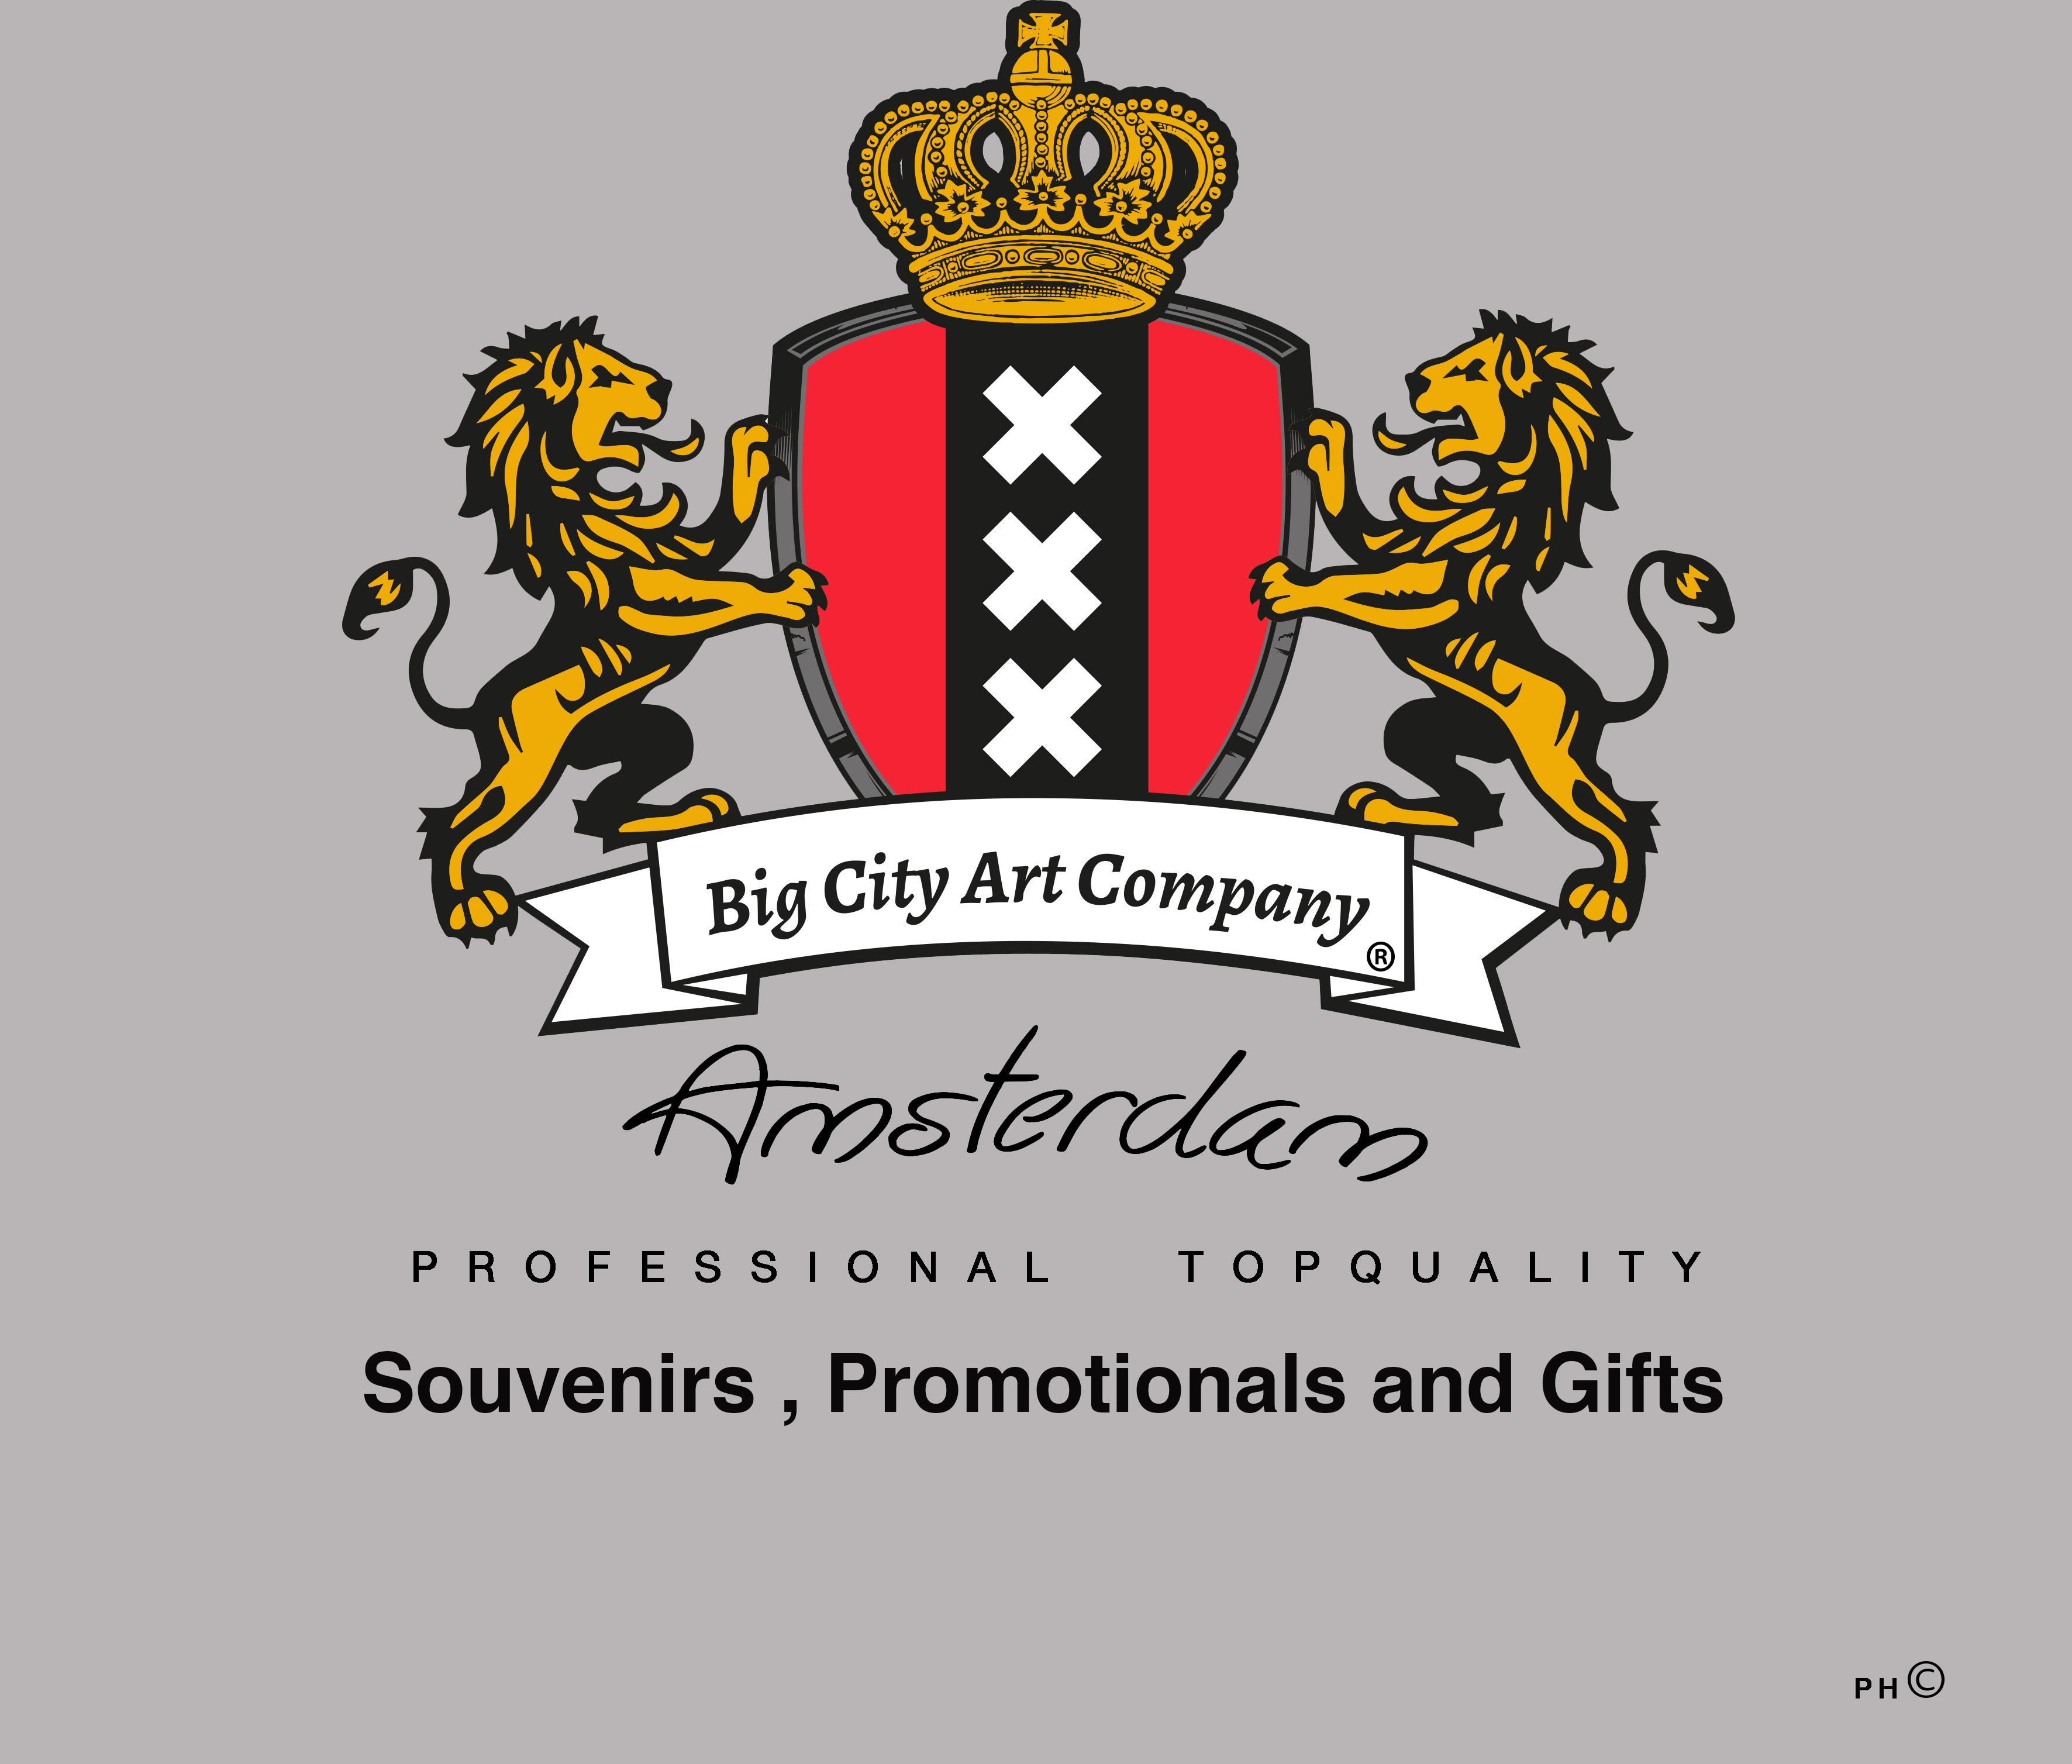 overspringen besteden lexicon Amsterdam Big City Art Company - Over Ons